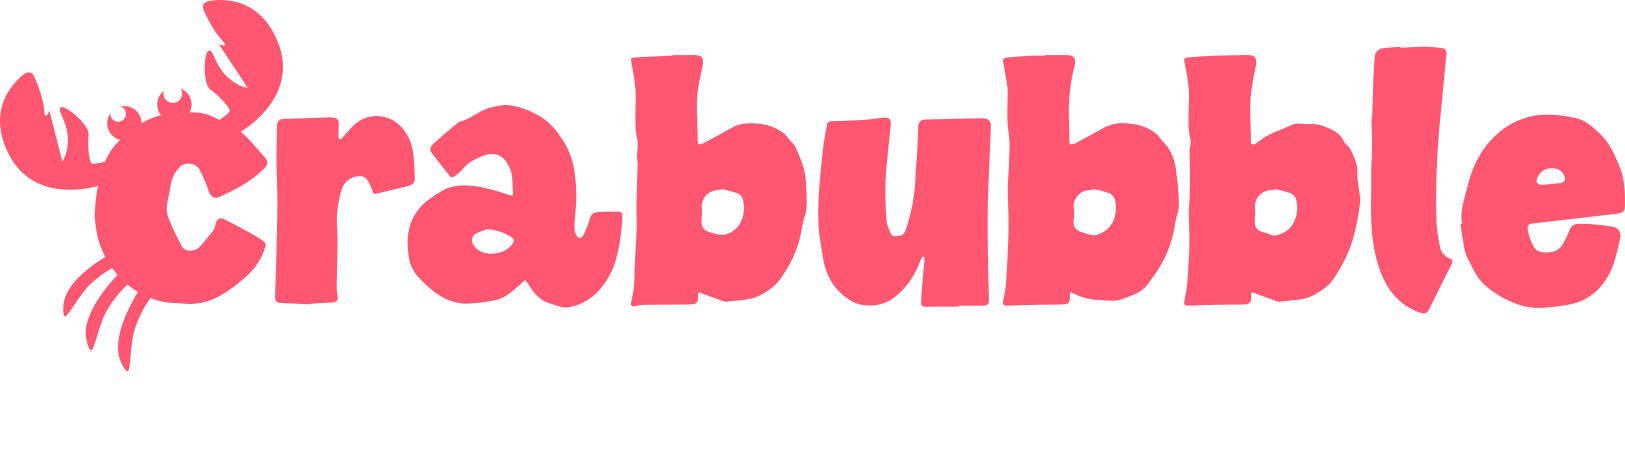 Crabubble Bubble Tea